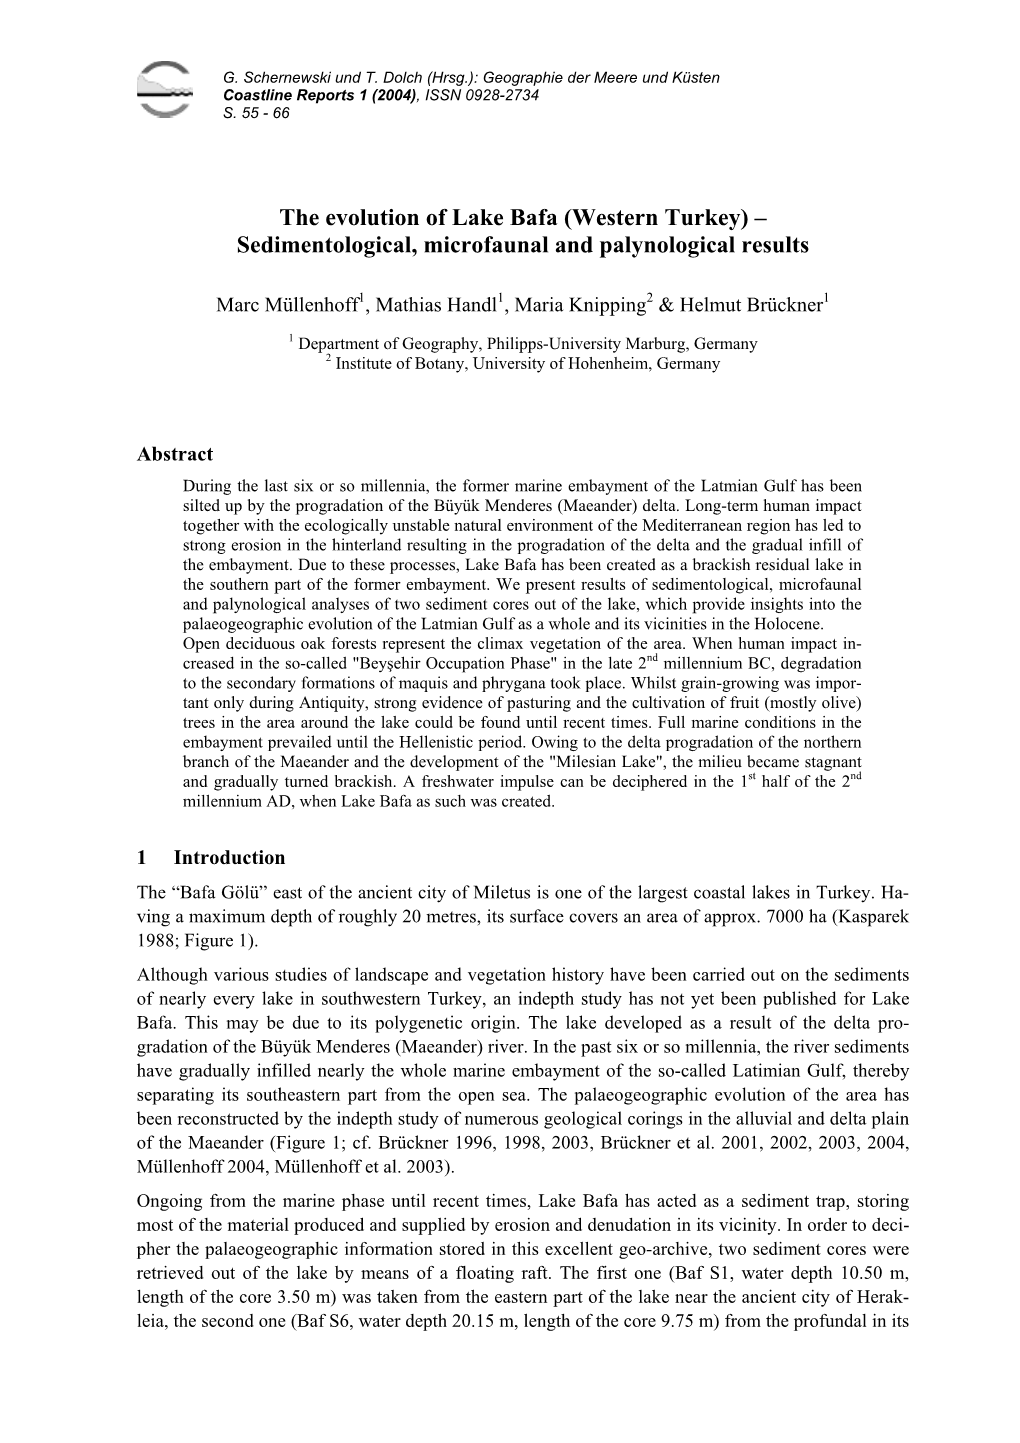 The Evolution of Lake Bafa (Western Turkey) – Sedimentological, Microfaunal and Palynological Results